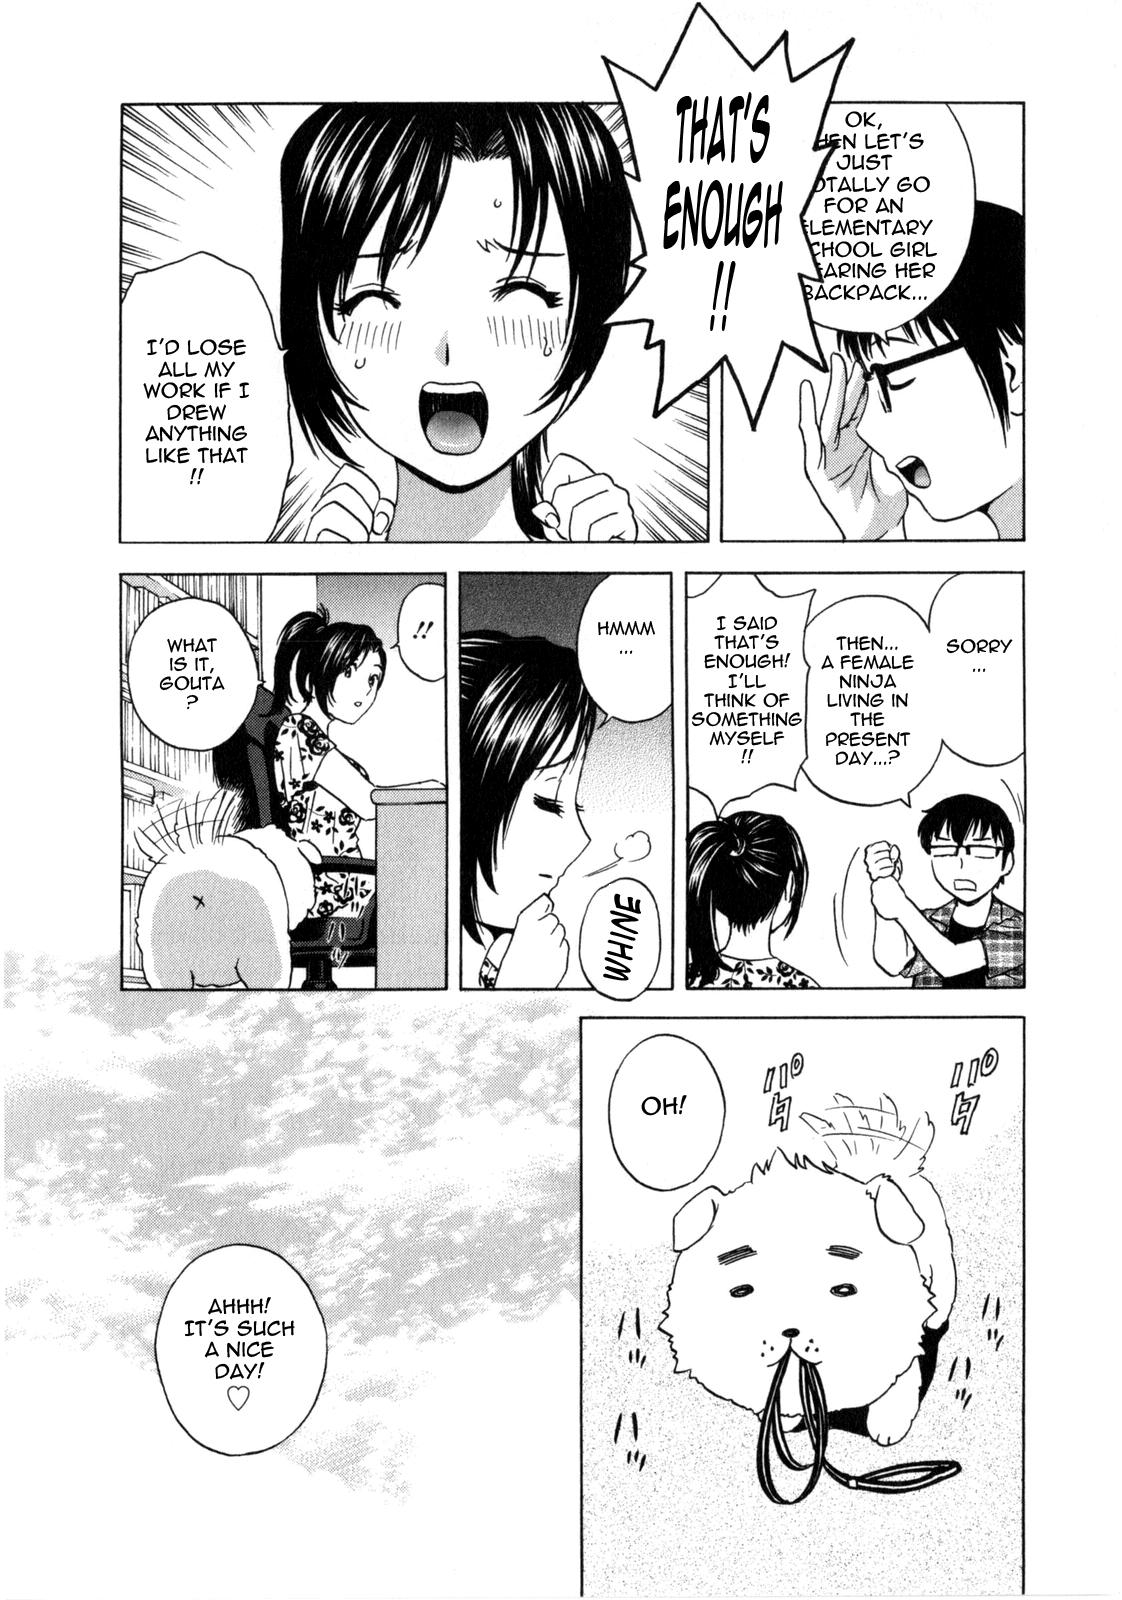 Life with Married Women Just Like a Manga 1 139